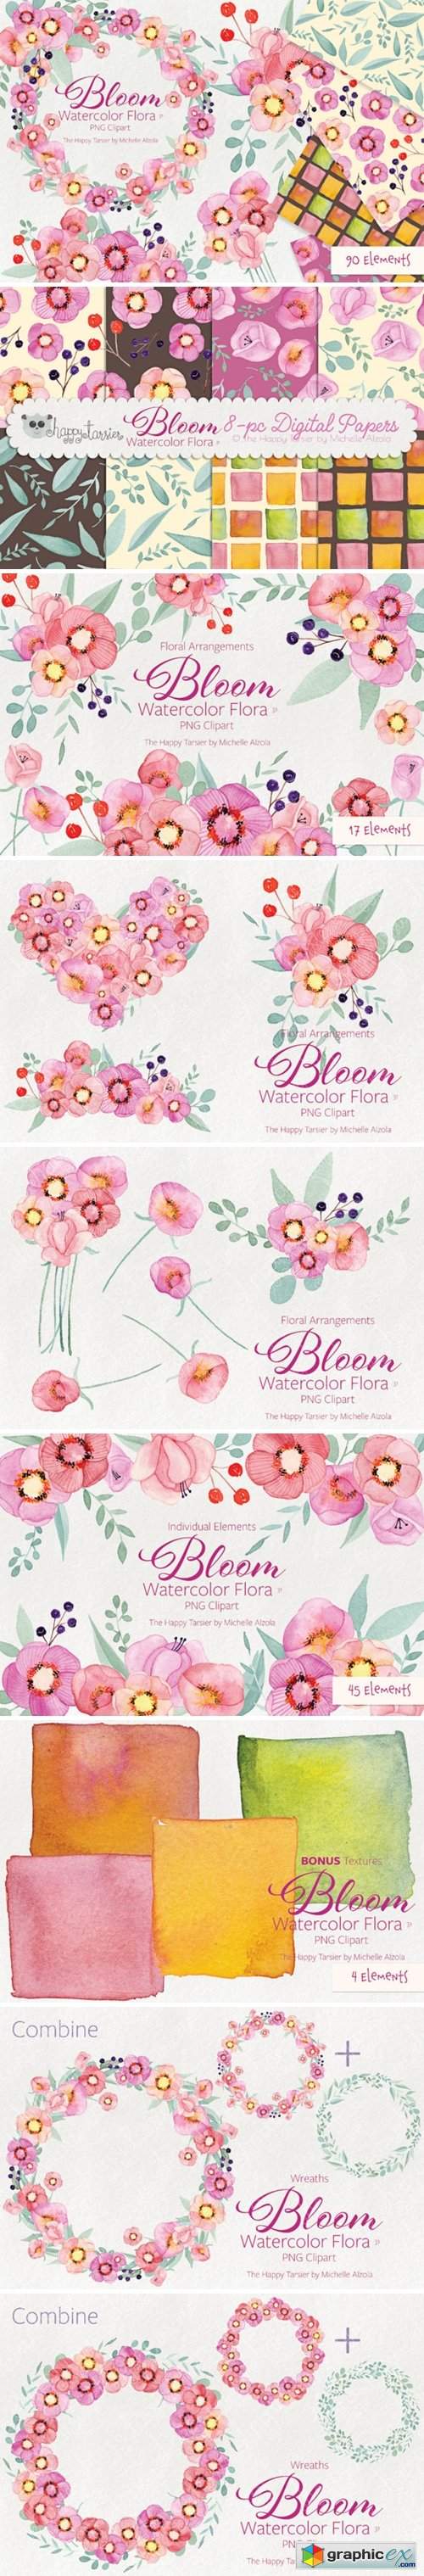 Bloom Watercolor Flora #31